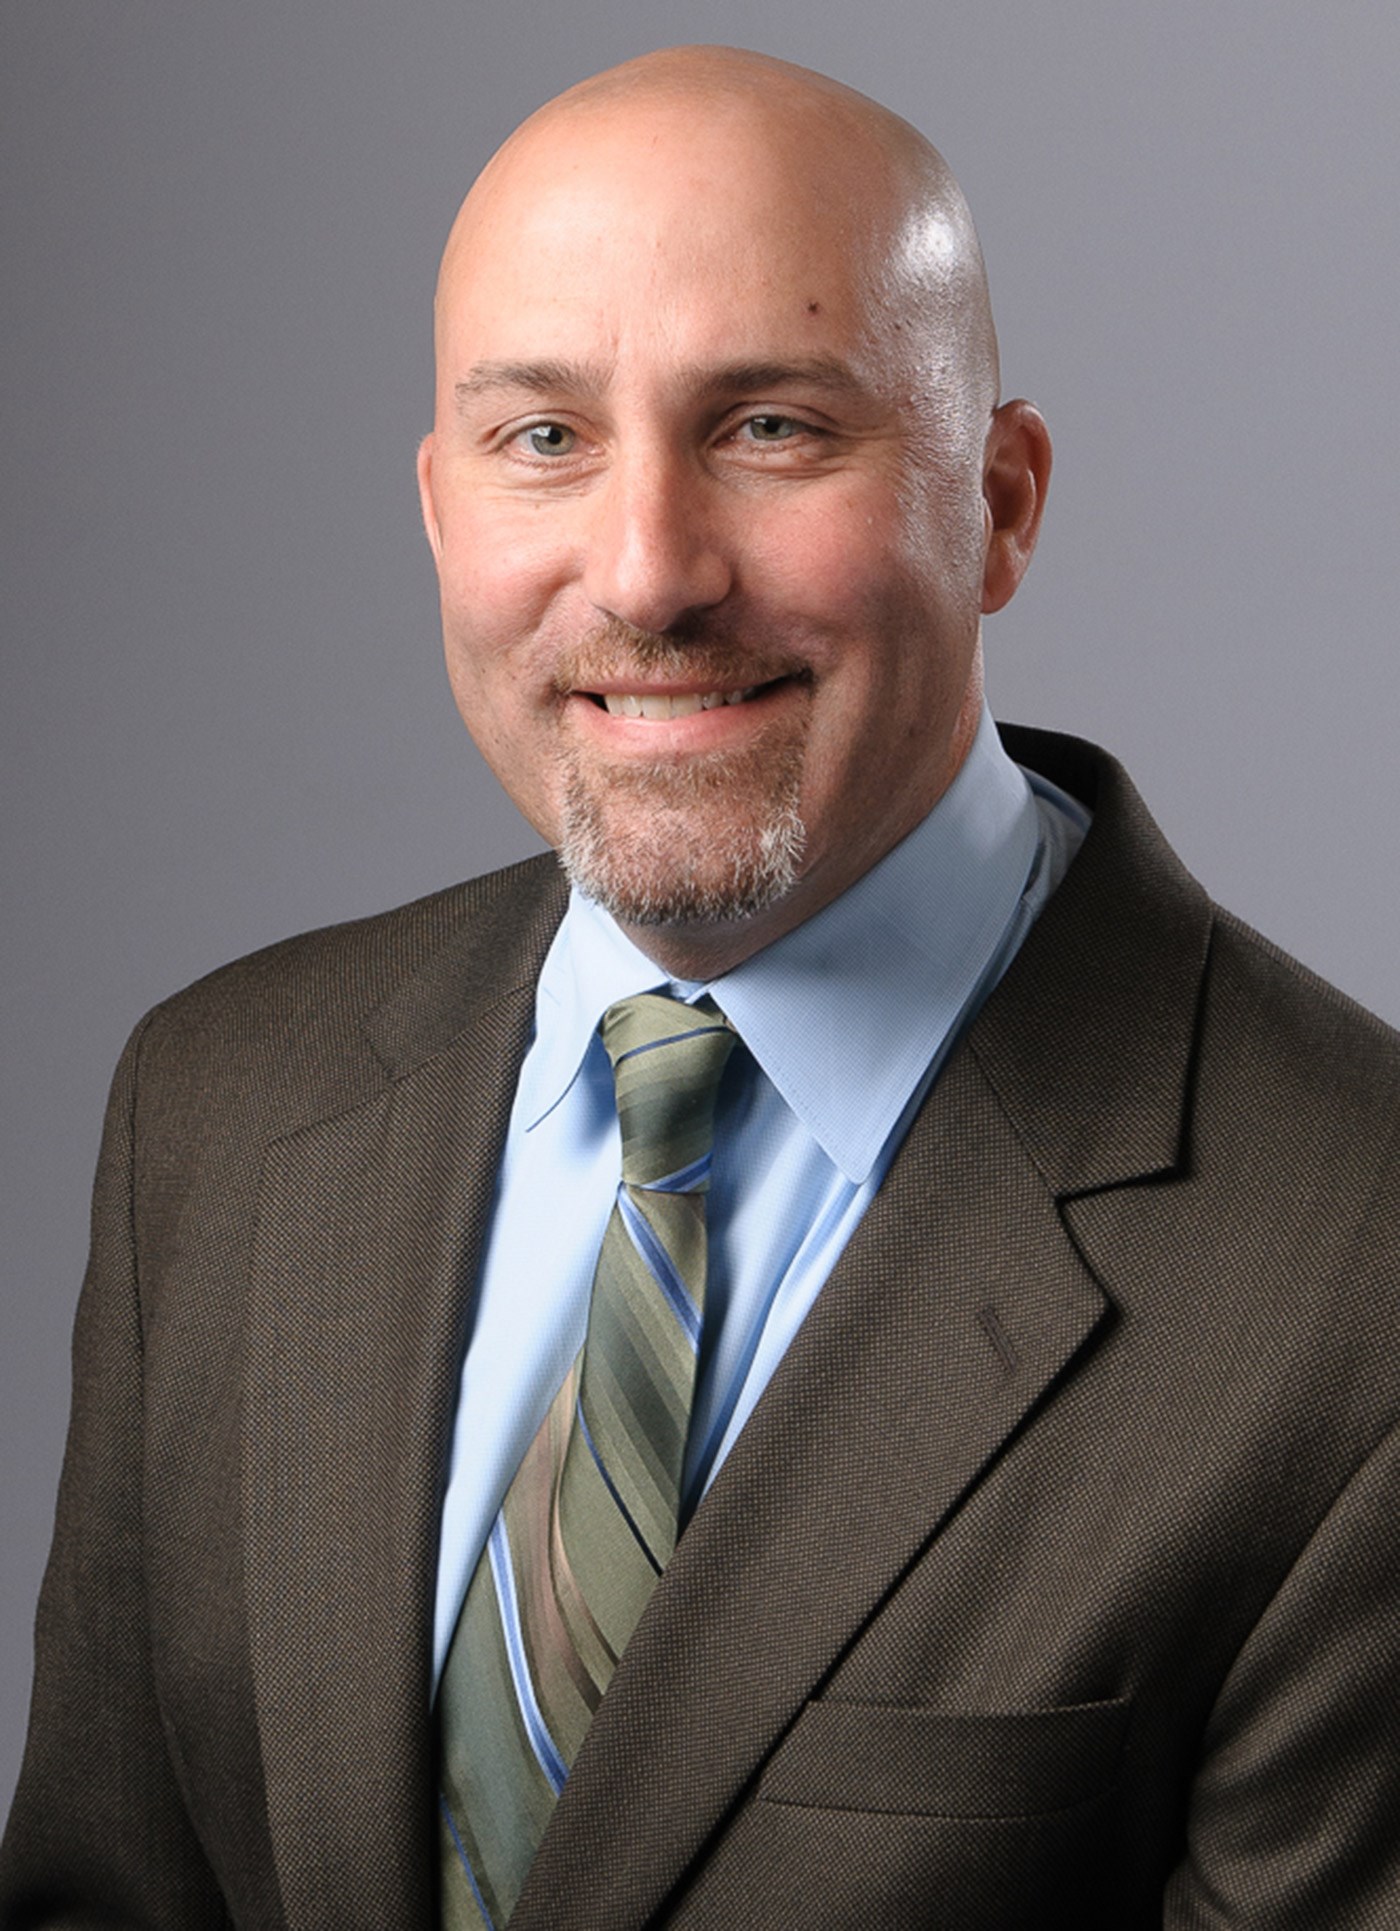 Glenn MacDonald is the Director Environmental Health & Safety at UMass Lowell.